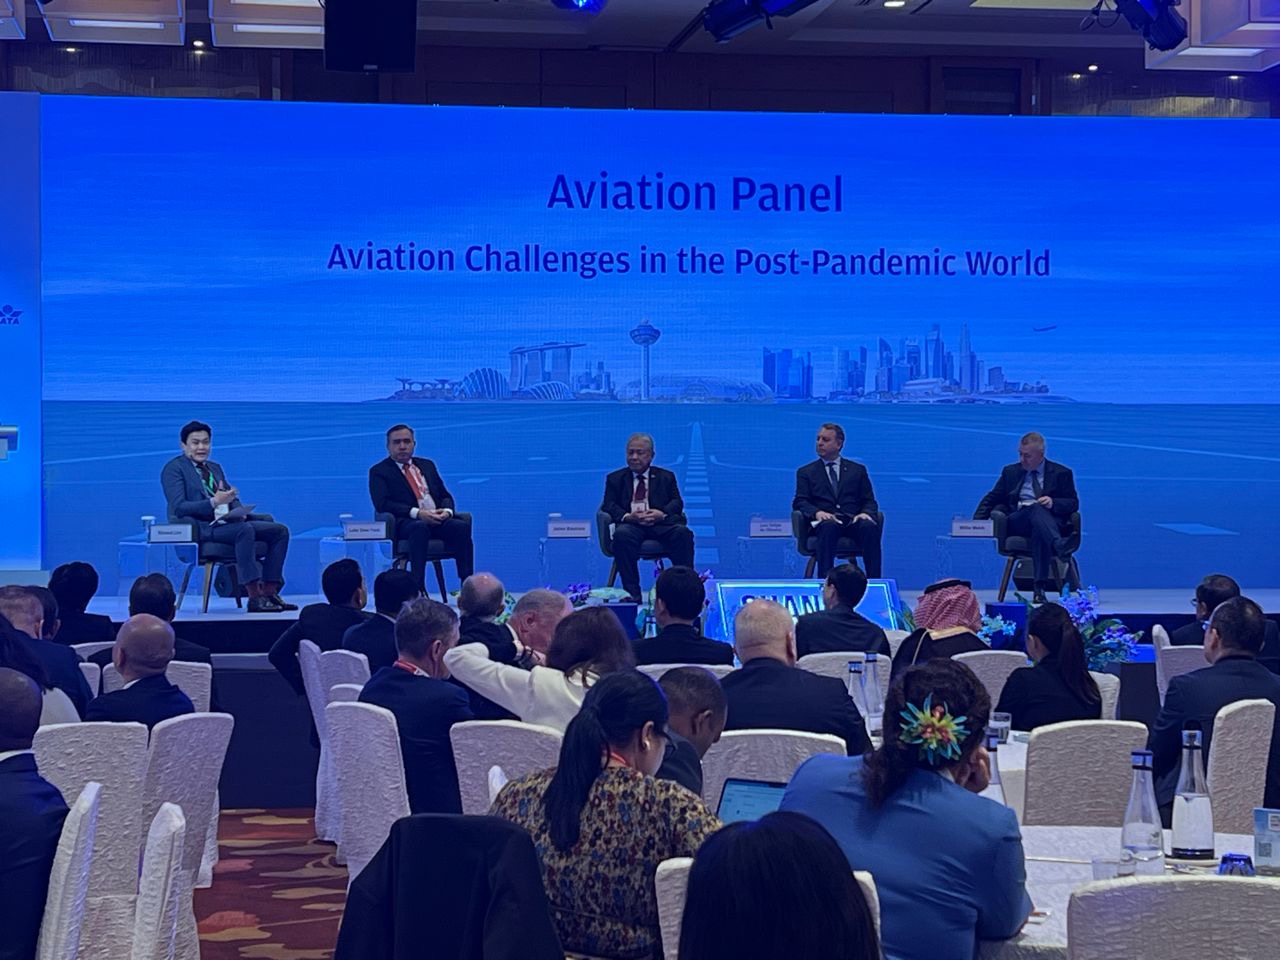 Cumbre de Changi Aviation Summit en Singapur